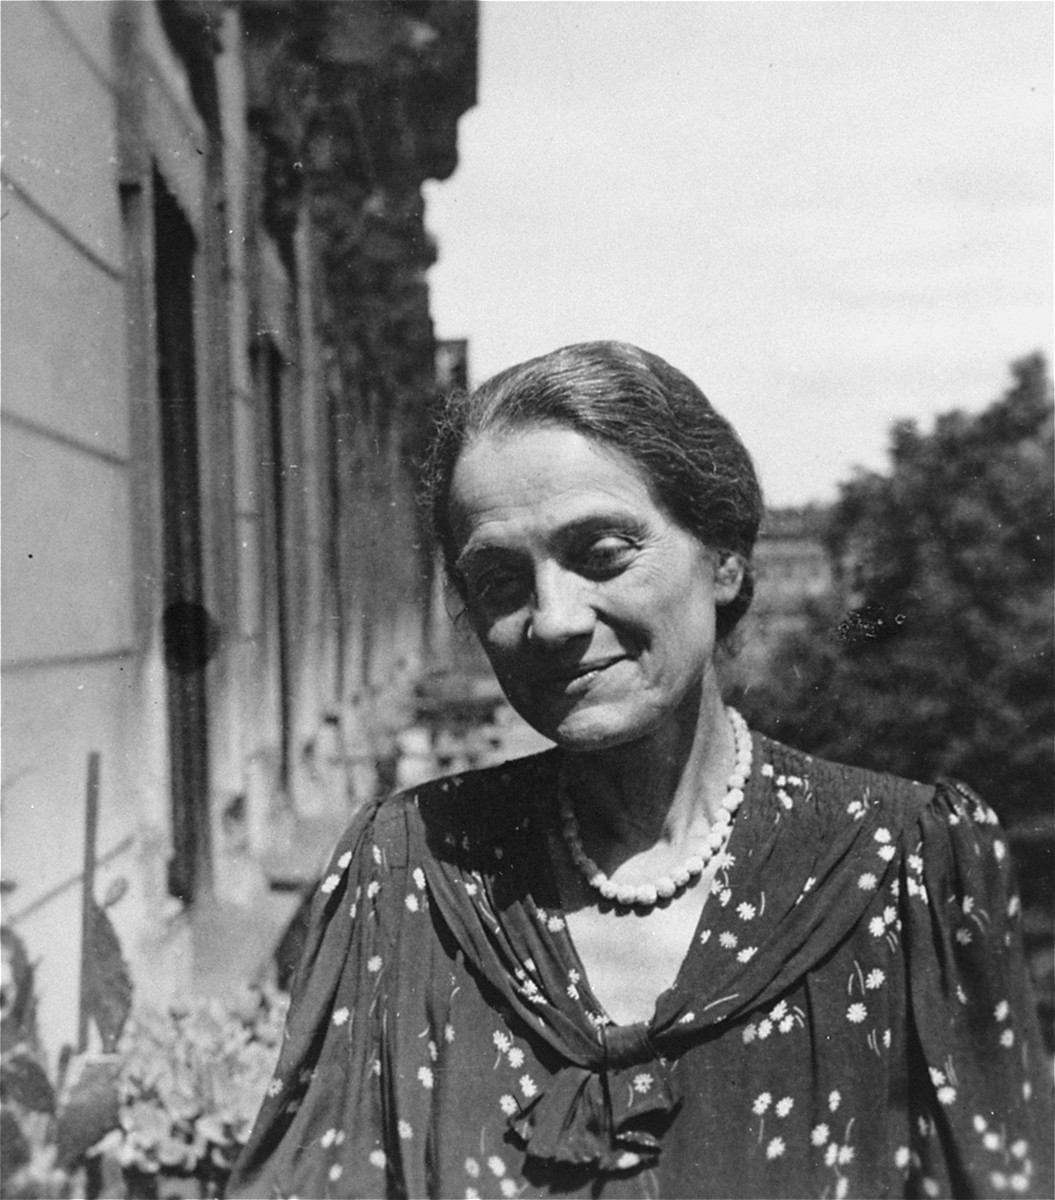 Portrait of Nanny (Gottschalk) Lewin in Berlin shortly before her deportation to Theresienstadt.